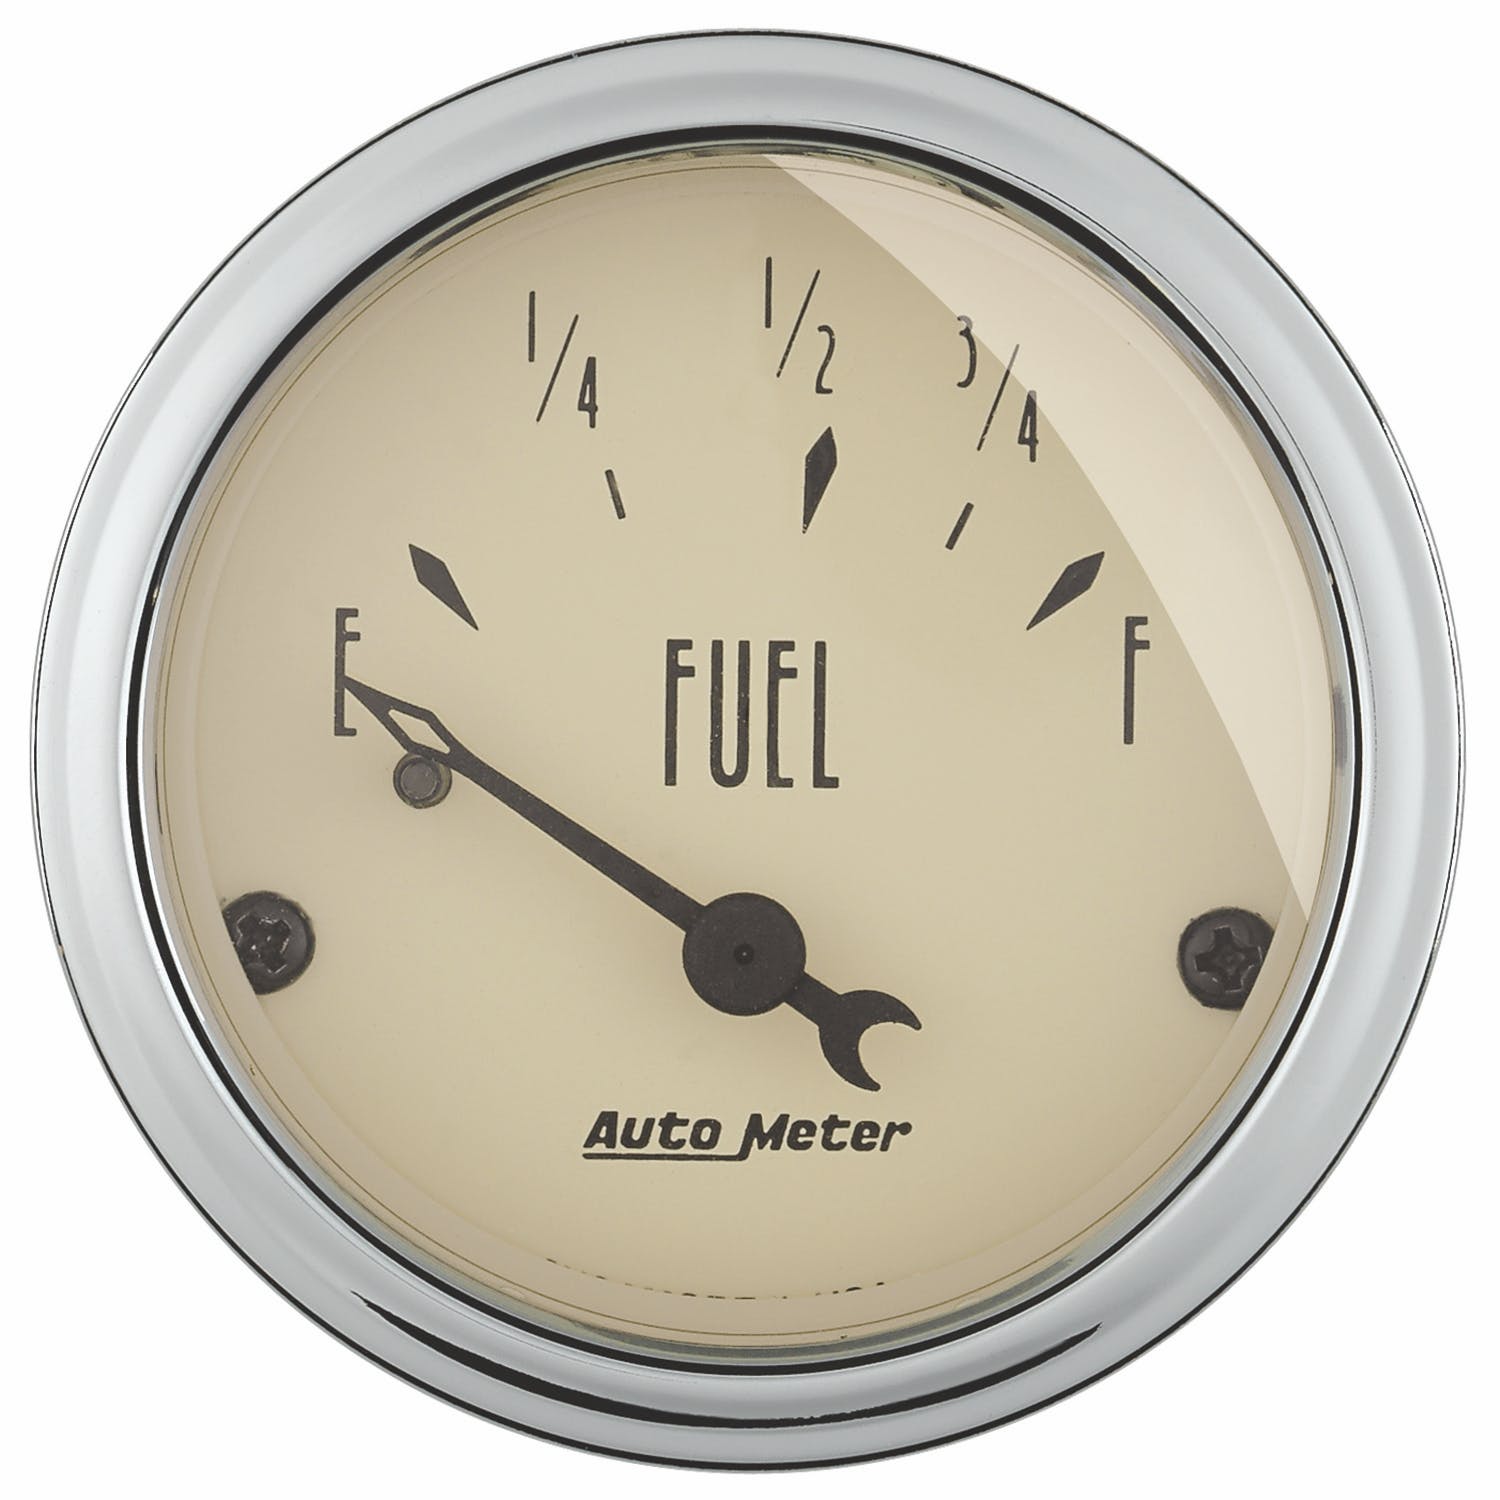 AutoMeter Products 1816 Fuel Level Gauge 73 E/8-12 F